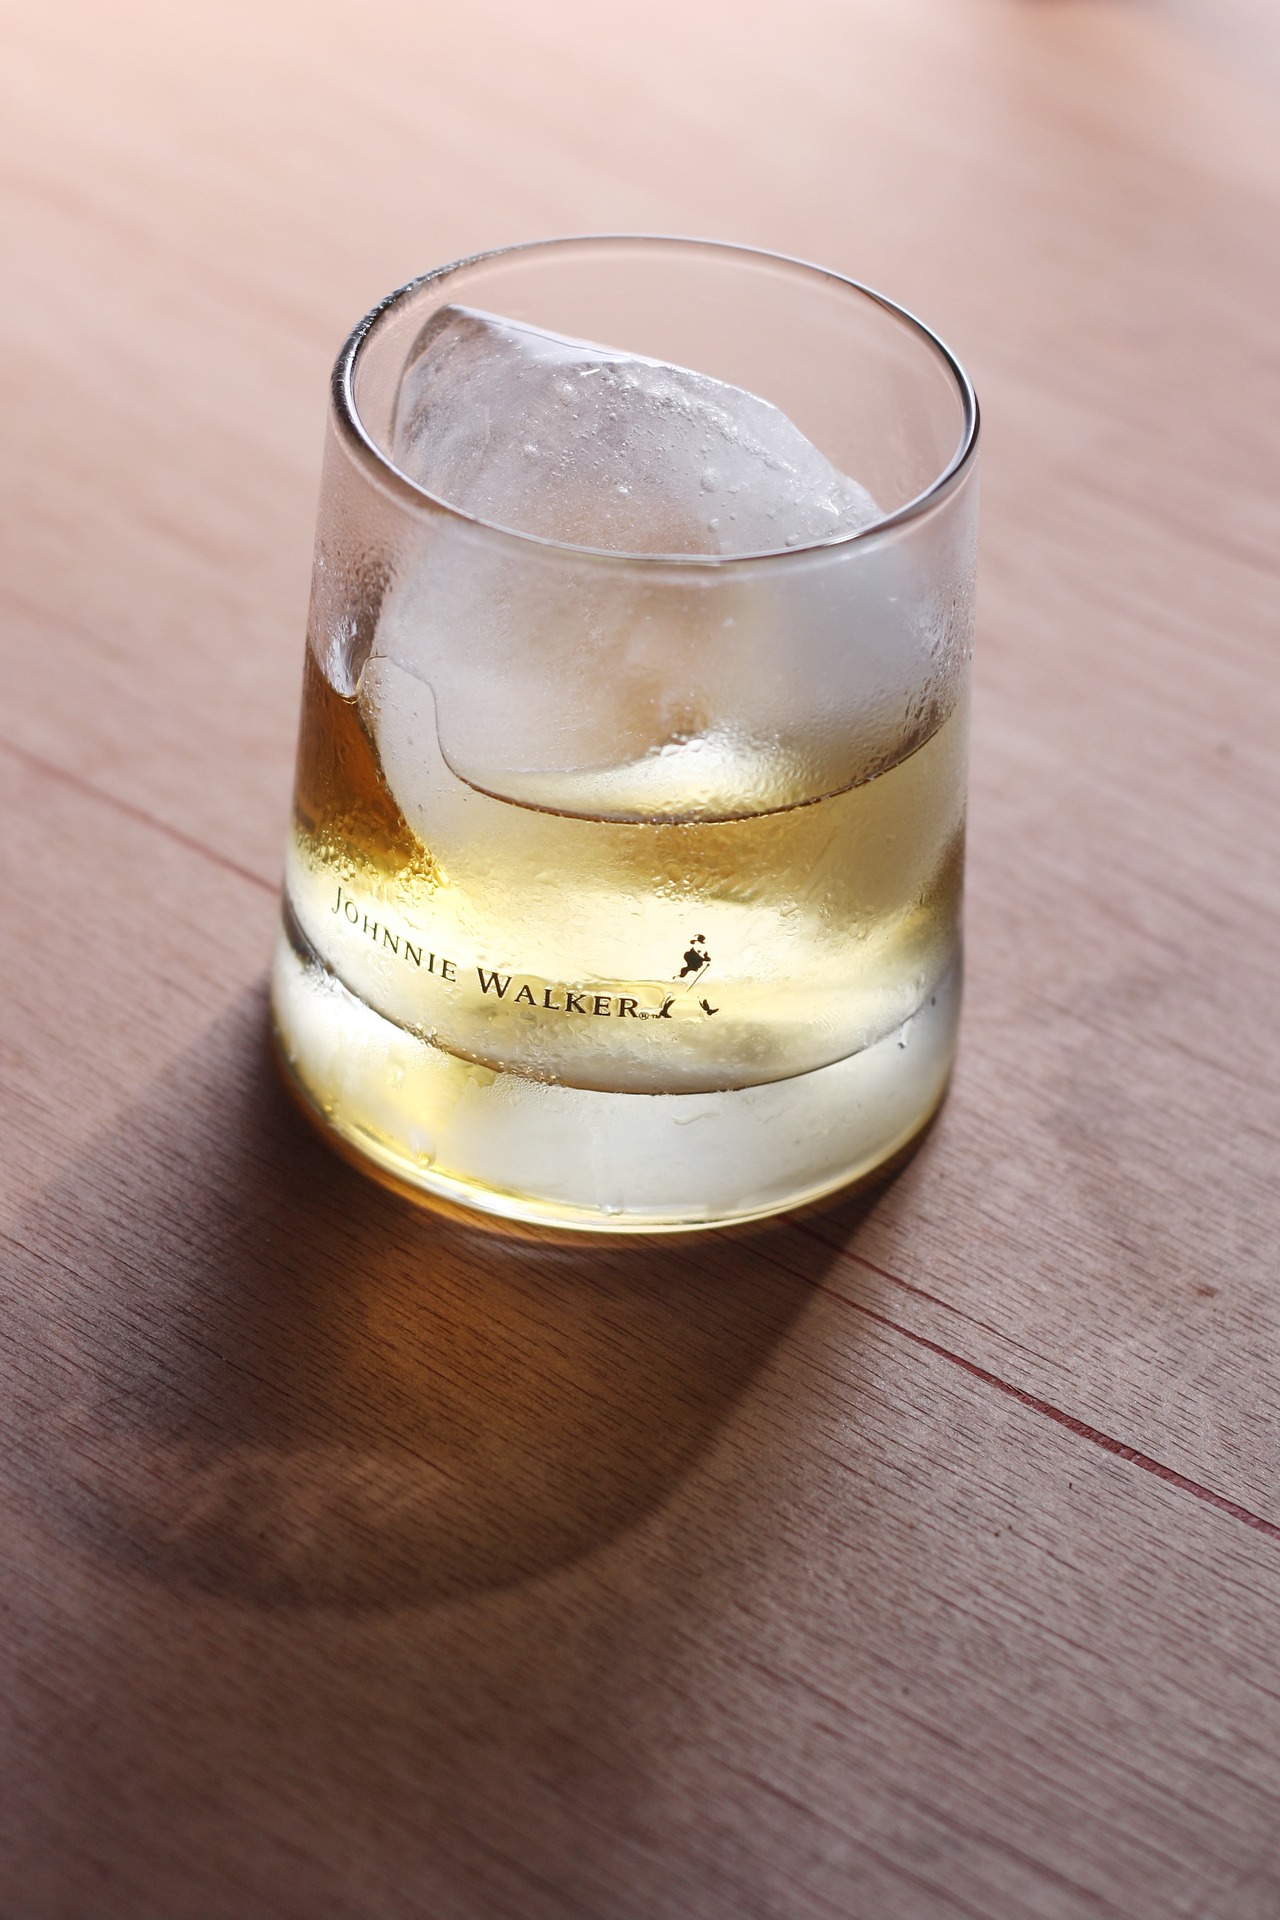 Whisky Johnnie Walker Black Label 12 Year Old Lowlands Origin (1L) Whisky Scozzese Blended